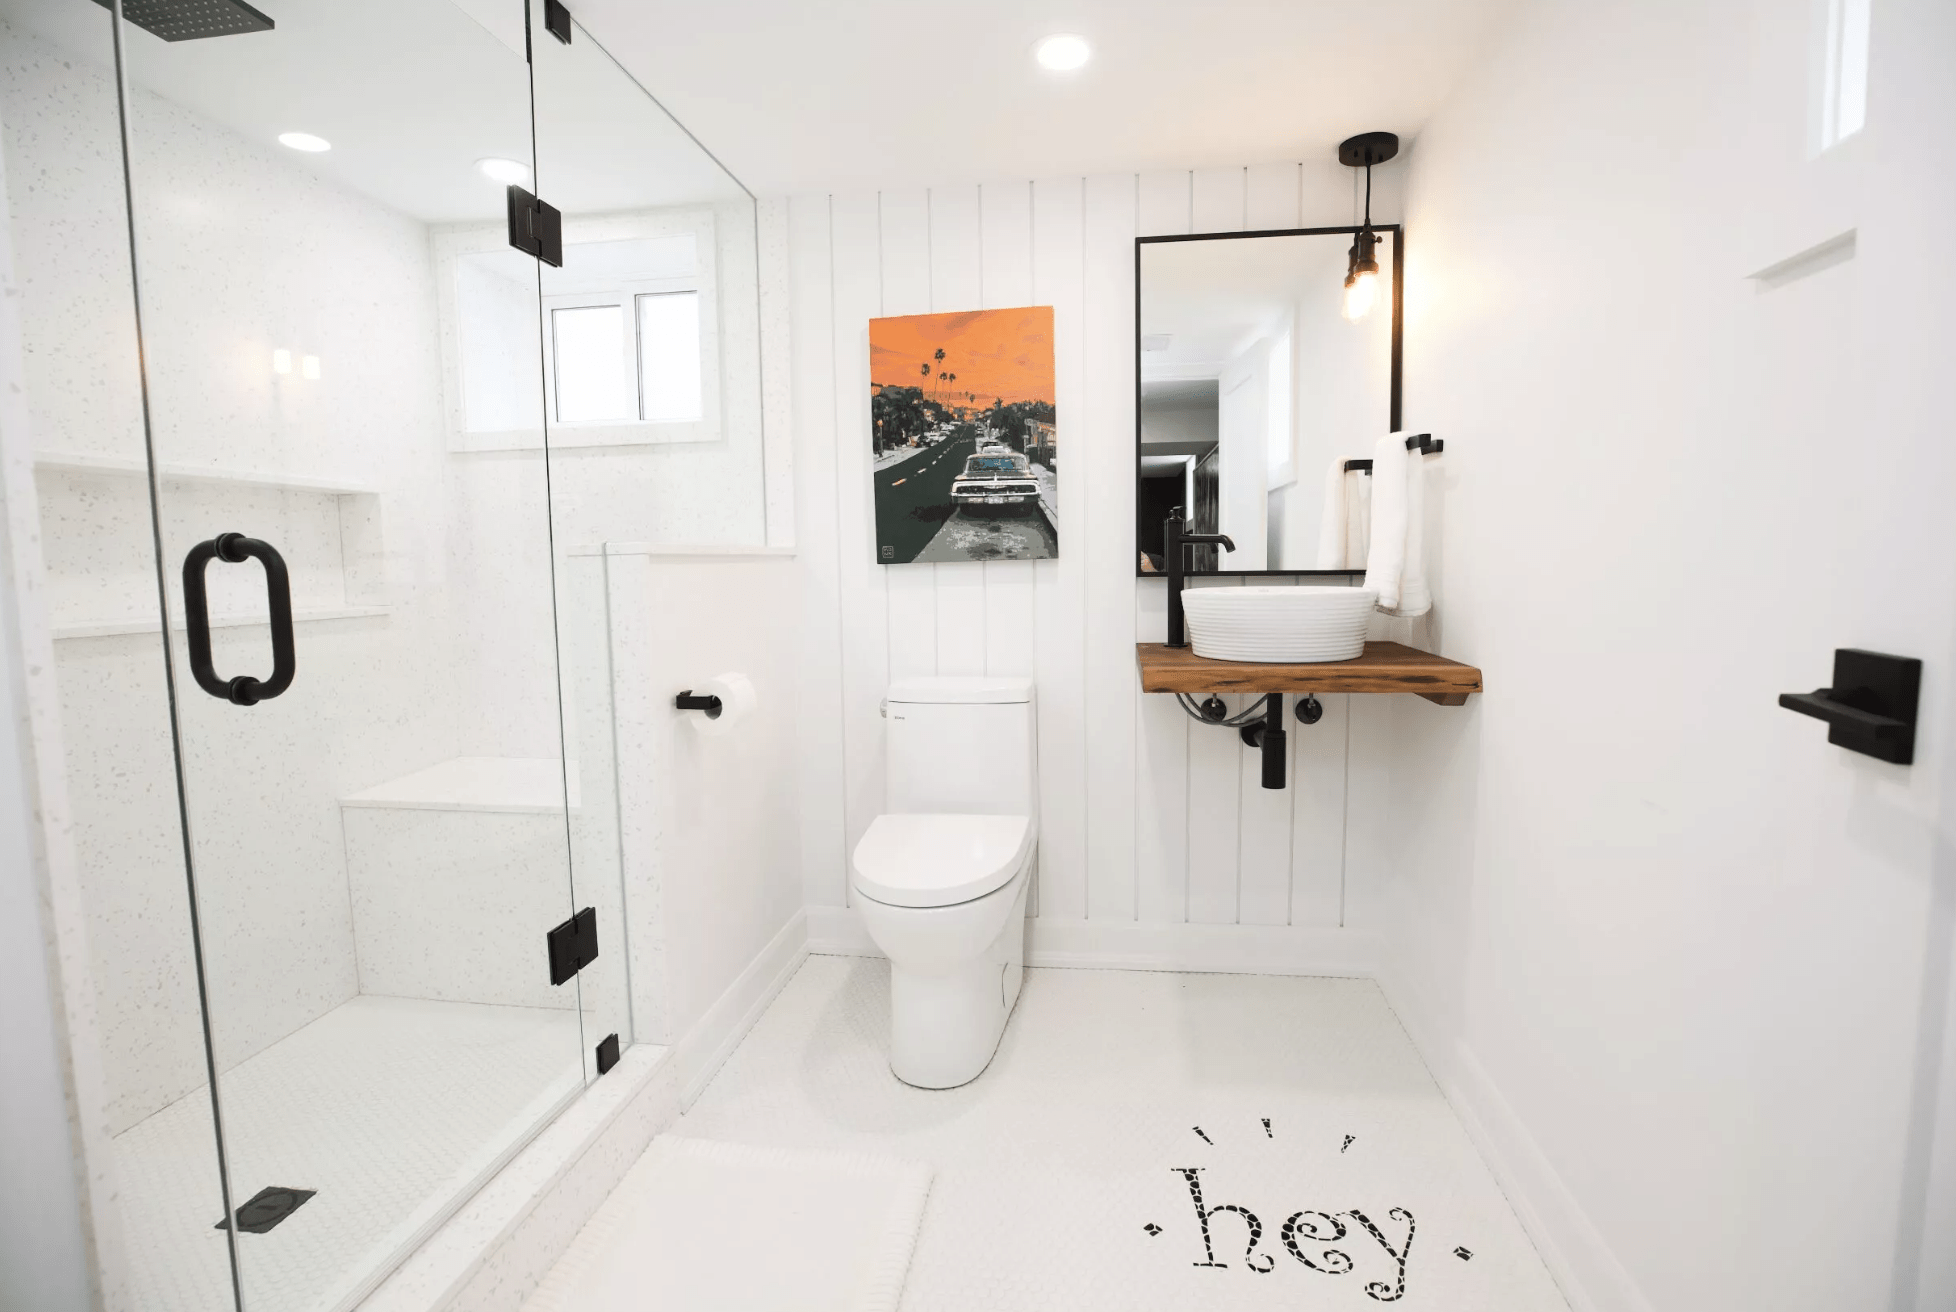 white bathroom tile glass shower door black fixture finishes hey tile design